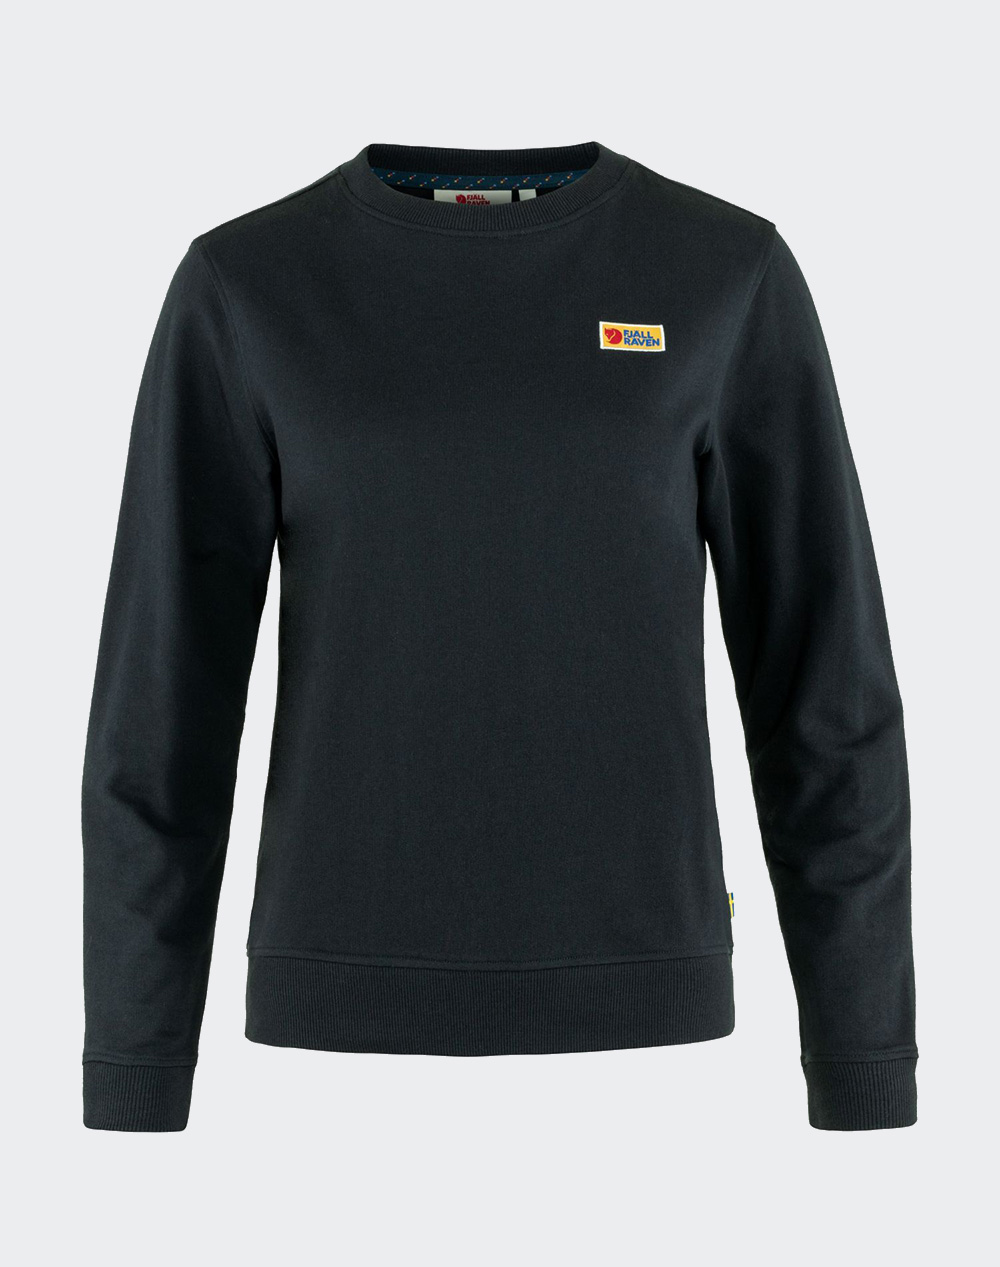 FJALLRAVEN Vardag Sweater W / Vardag Sweater W F87075-550 Black